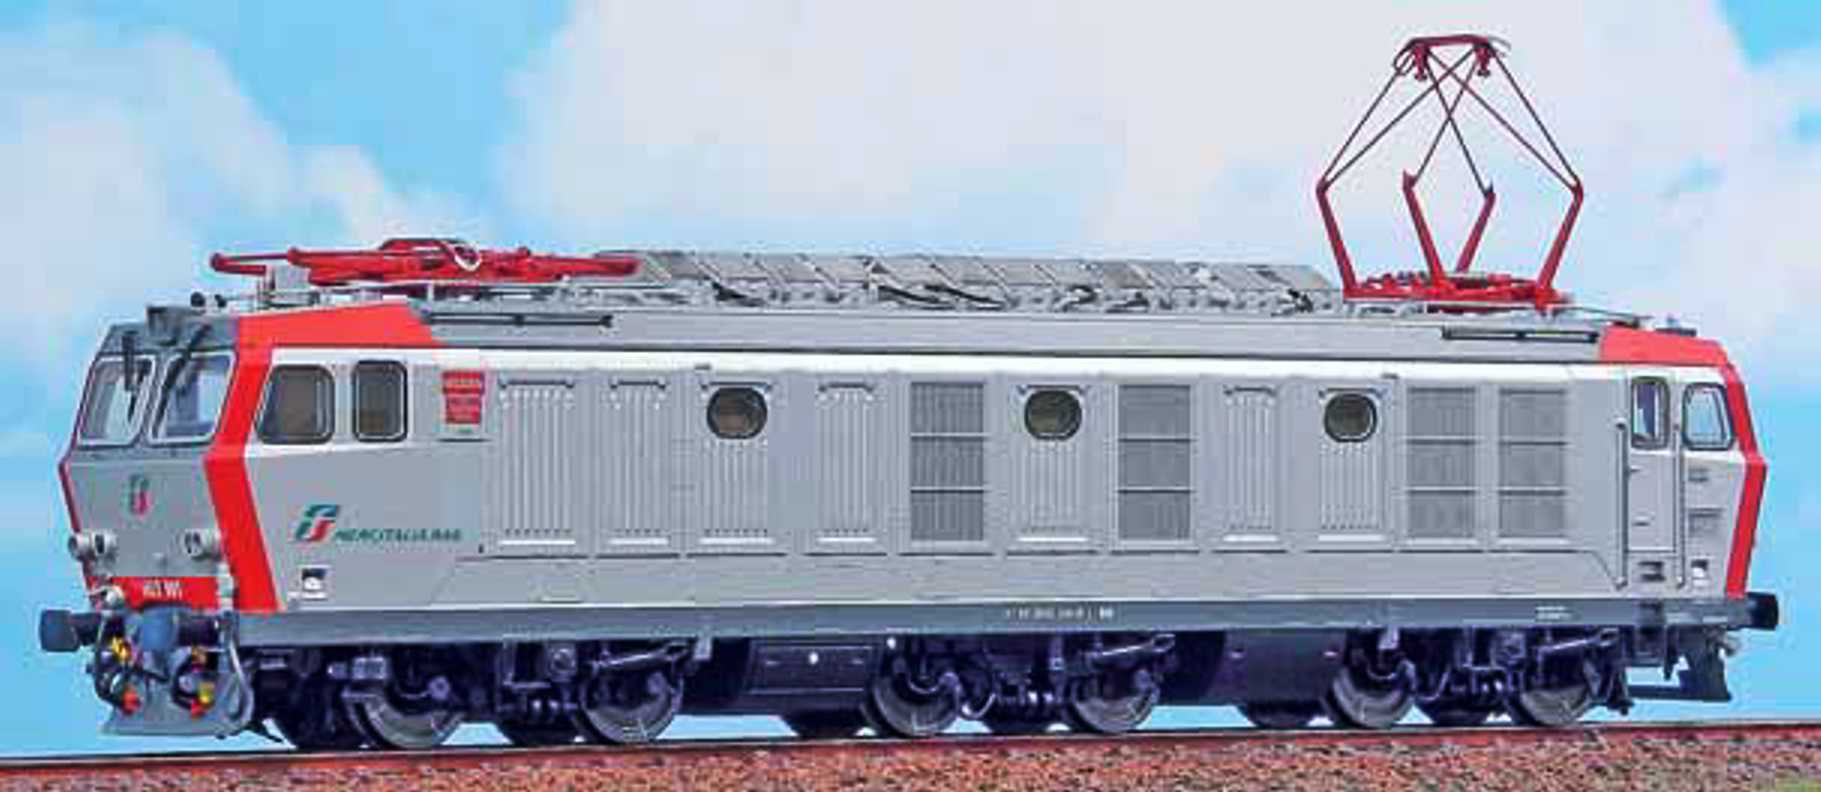 半価特売アクメ ACME 60431 locomotiva E 636 080 Epoca V A.C.M.E HOゲージ 鉄道模型 海外 列車 電車 車両 中古 良好 M6514562 JR、国鉄車輌